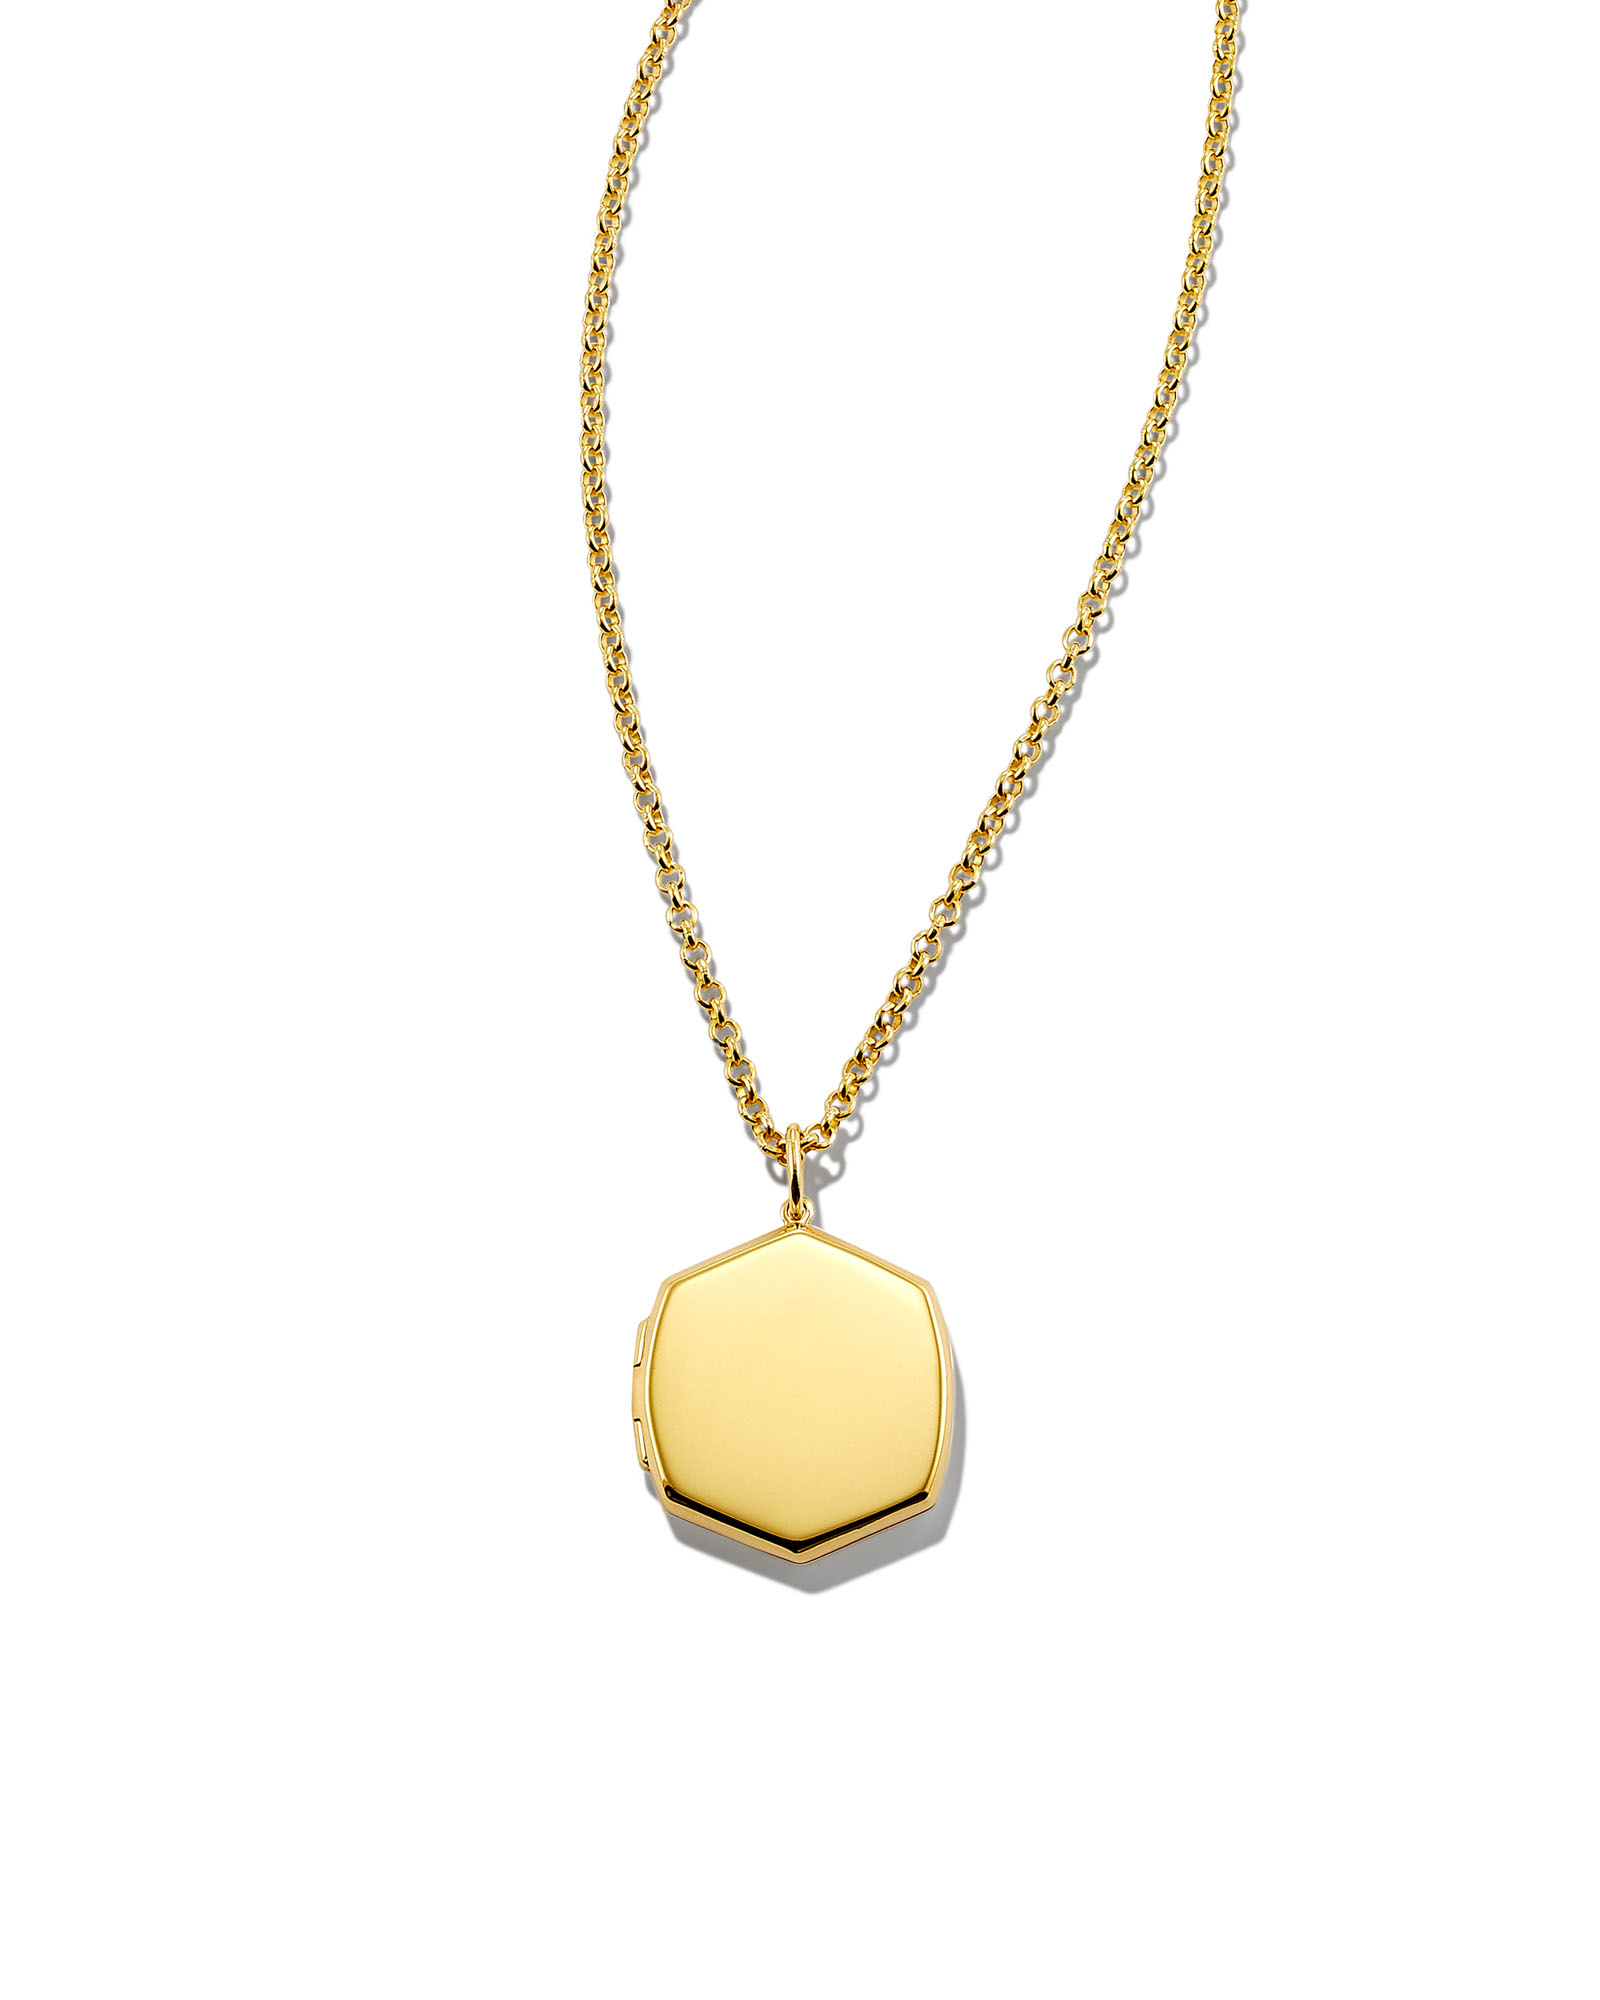 Davis Locket Charm Necklace in 18k Yellow Gold Vermeil | Kendra Scott